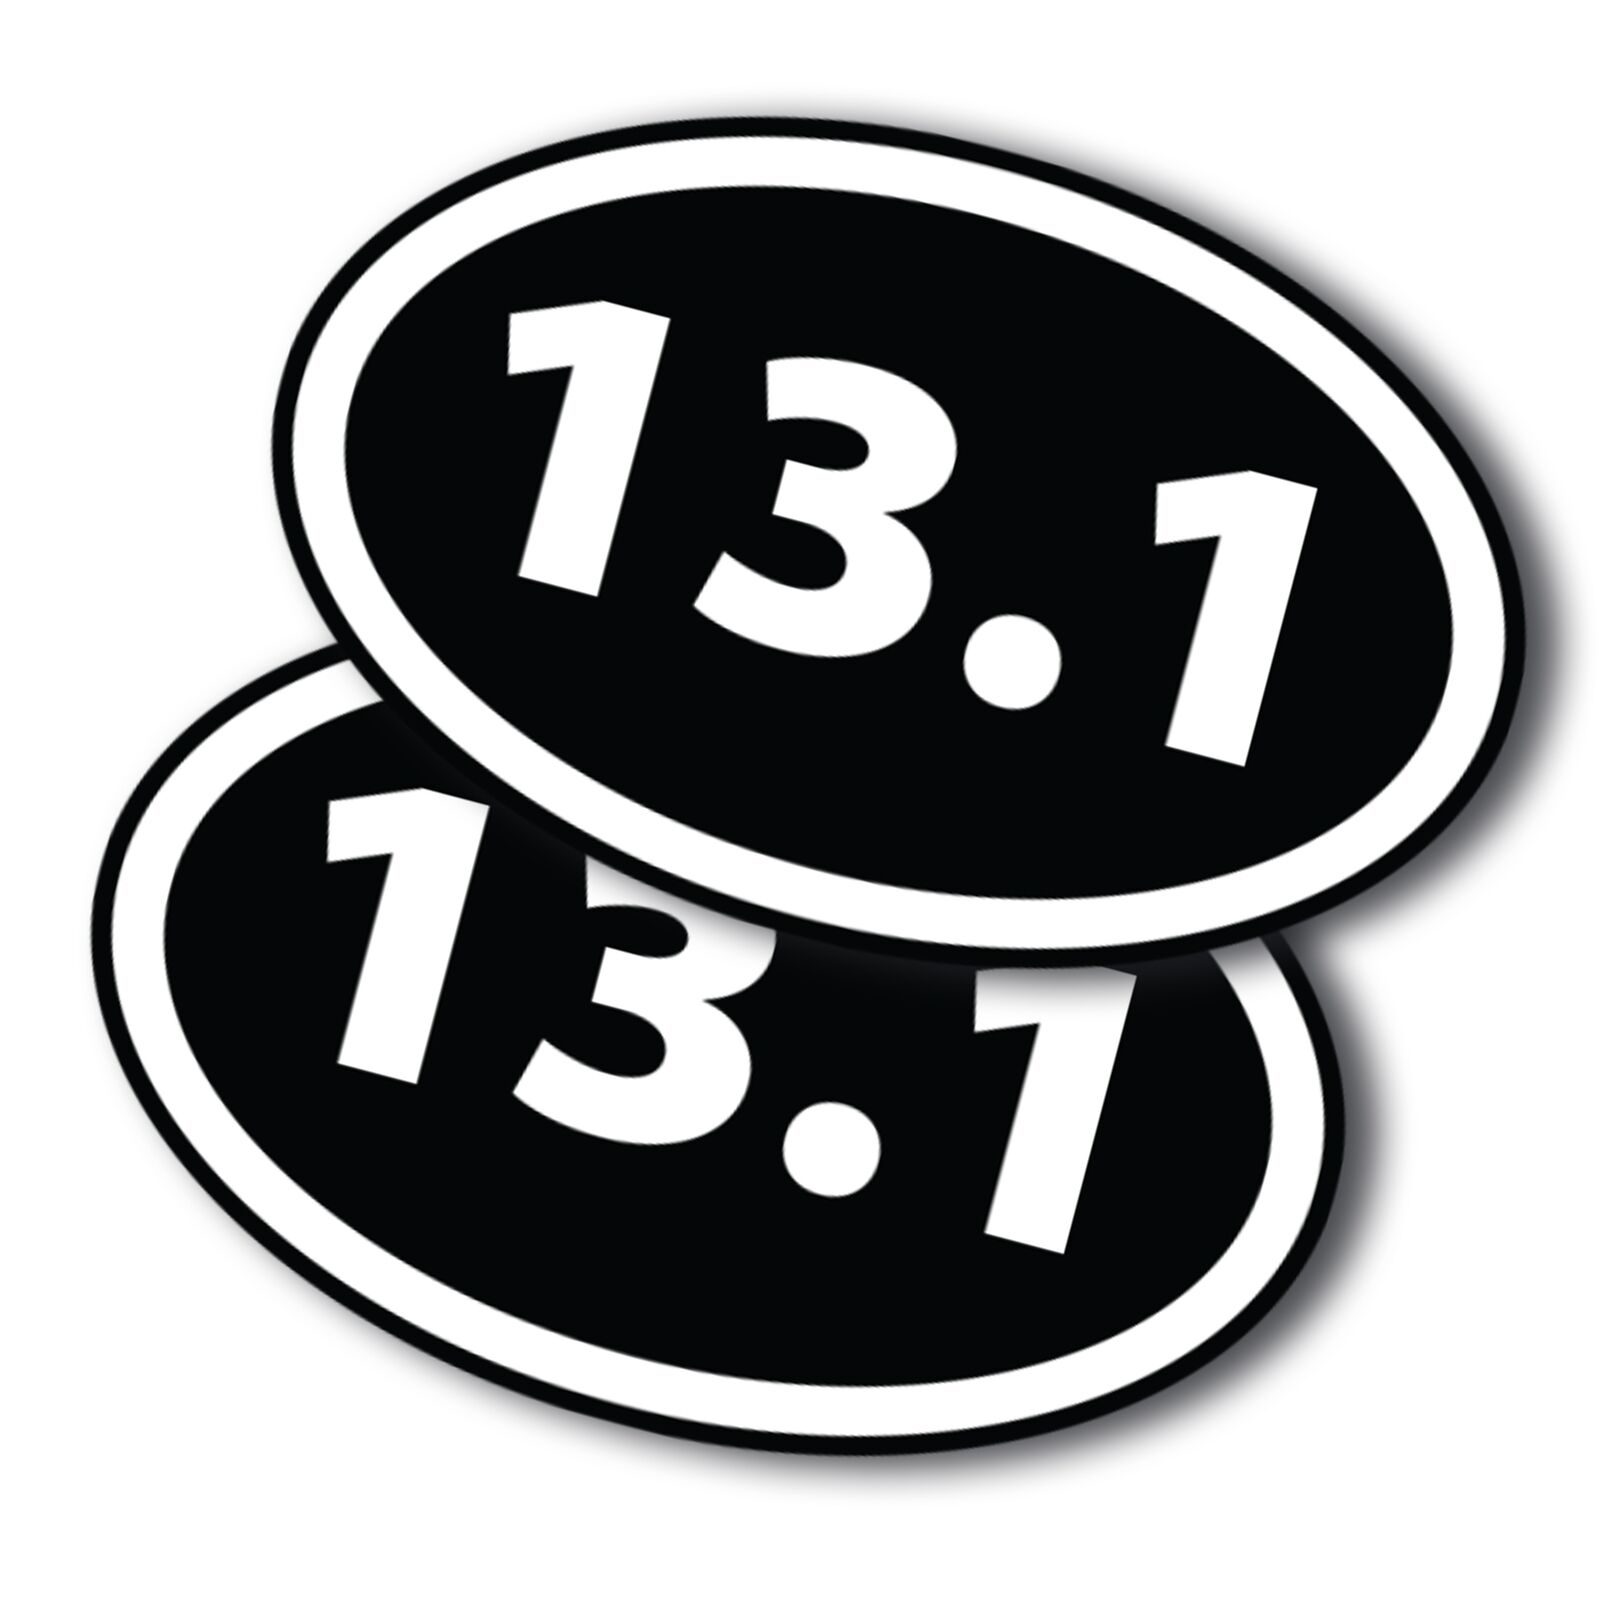 13.1 Half Marathon Inverted Black Oval Runner Adhesive Decal Sticker, 2 Pack